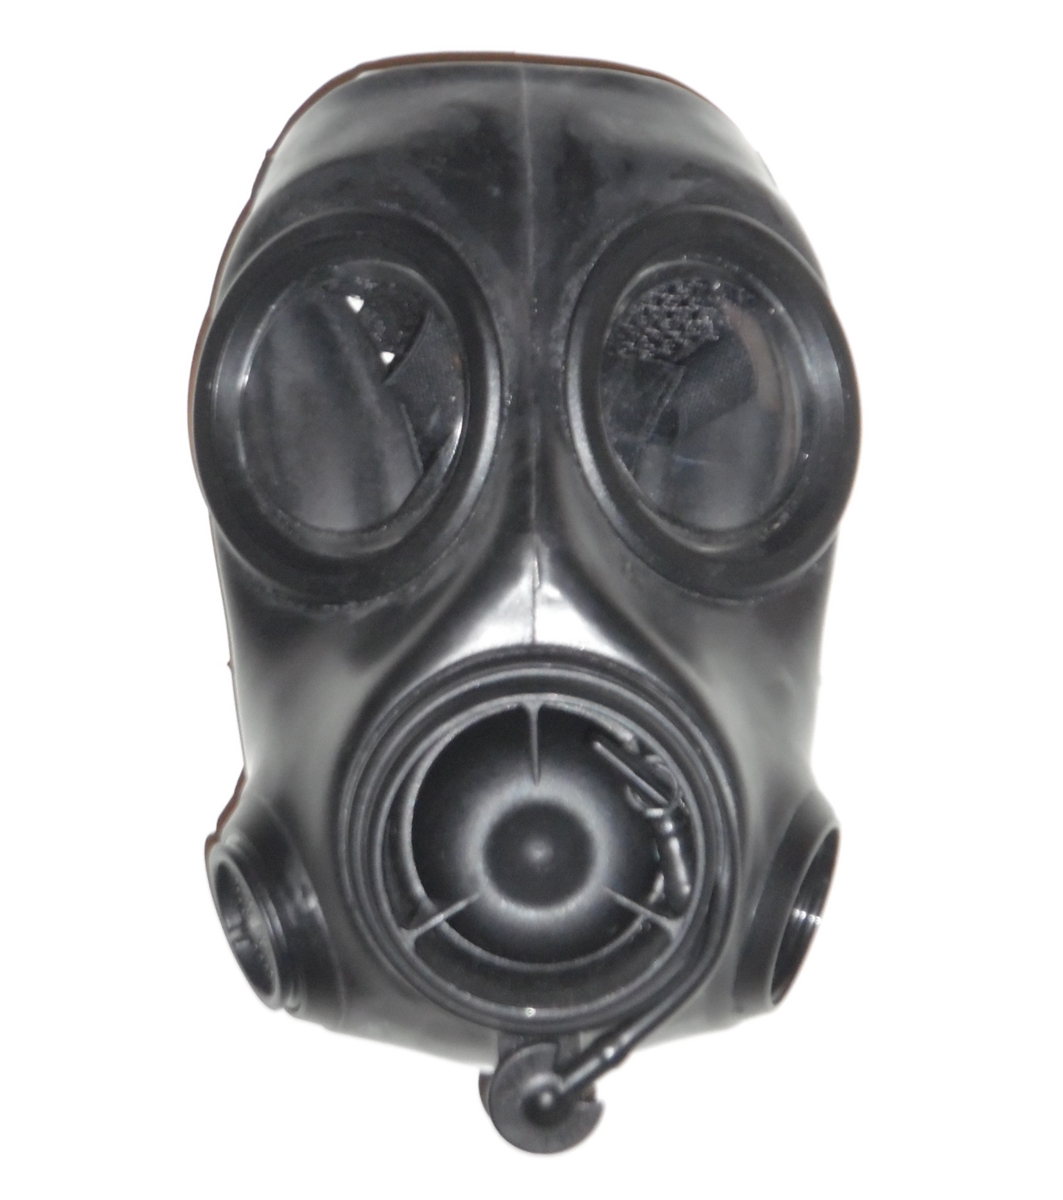 Avon FM12 Gas Mask Respirator, 40mm NATO threaded filters...